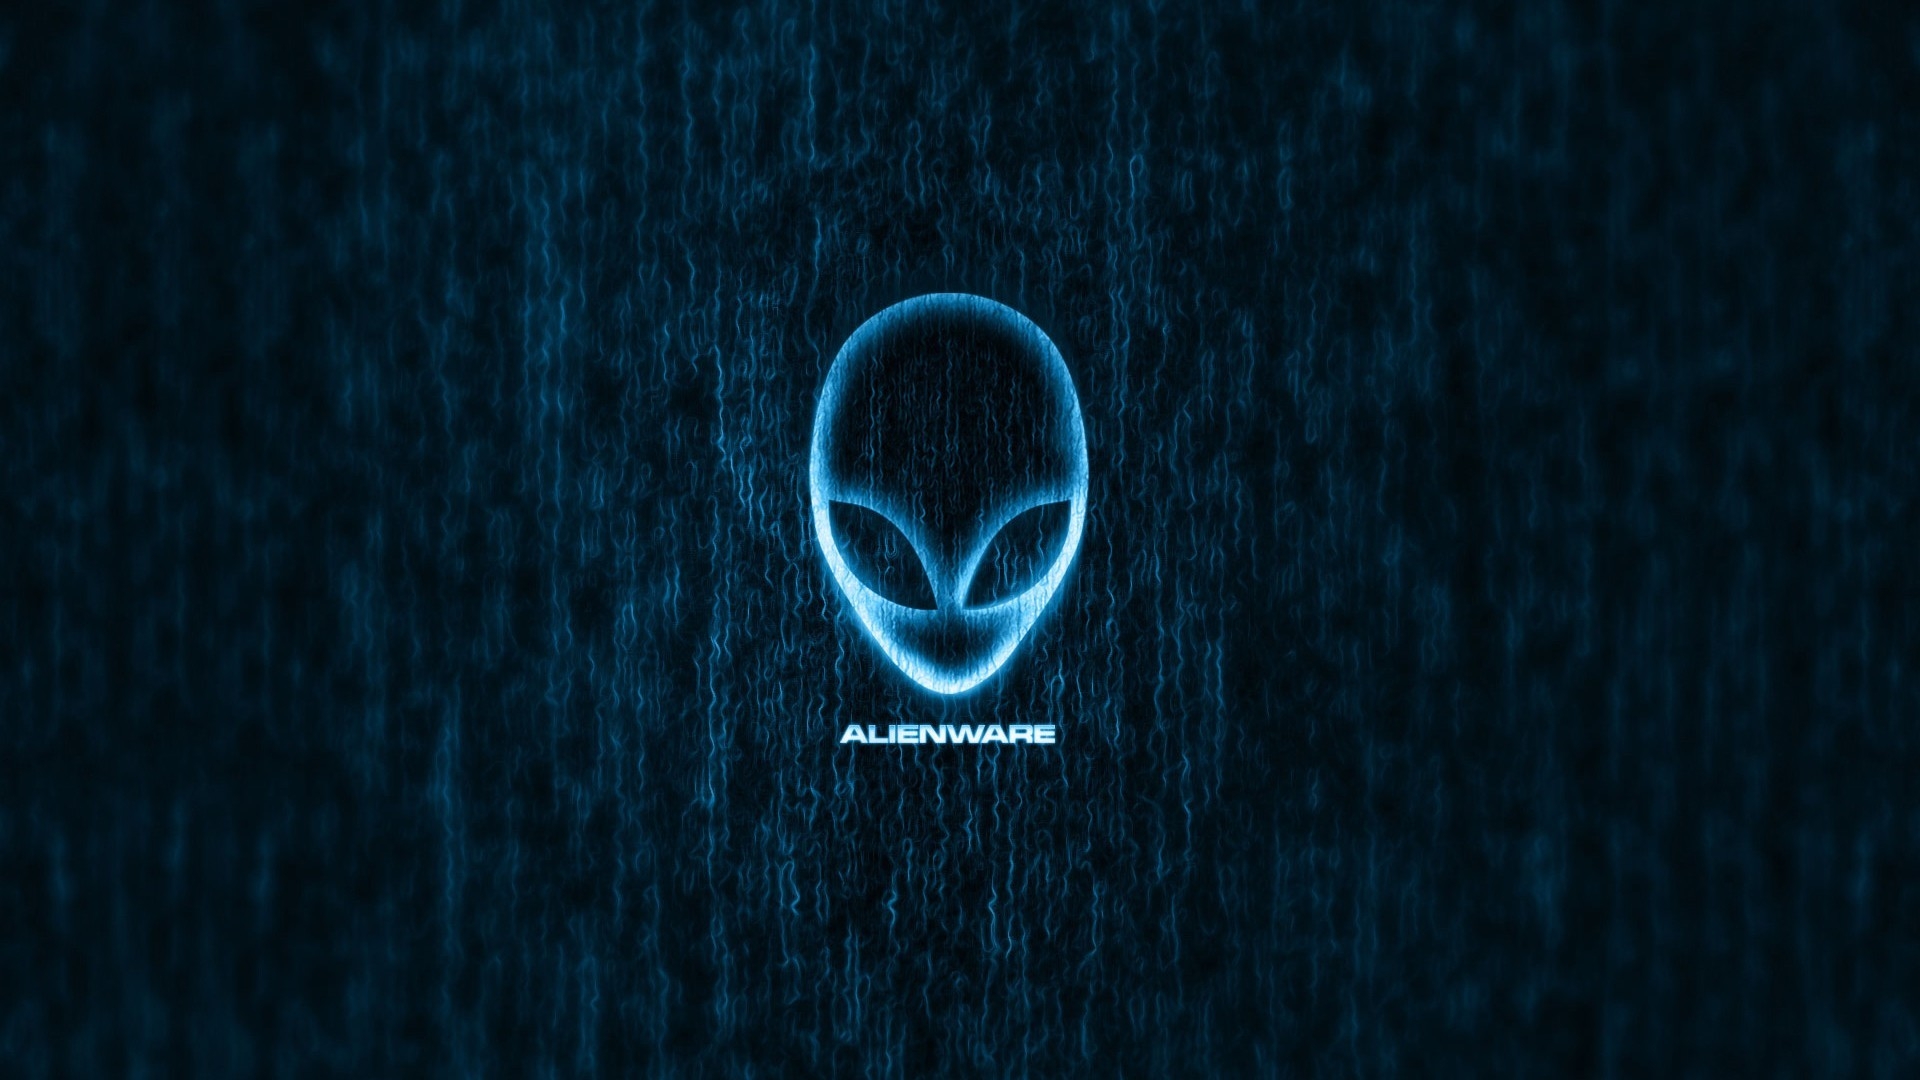 Alienware Company Logo for 1920 x 1080 HDTV 1080p resolution